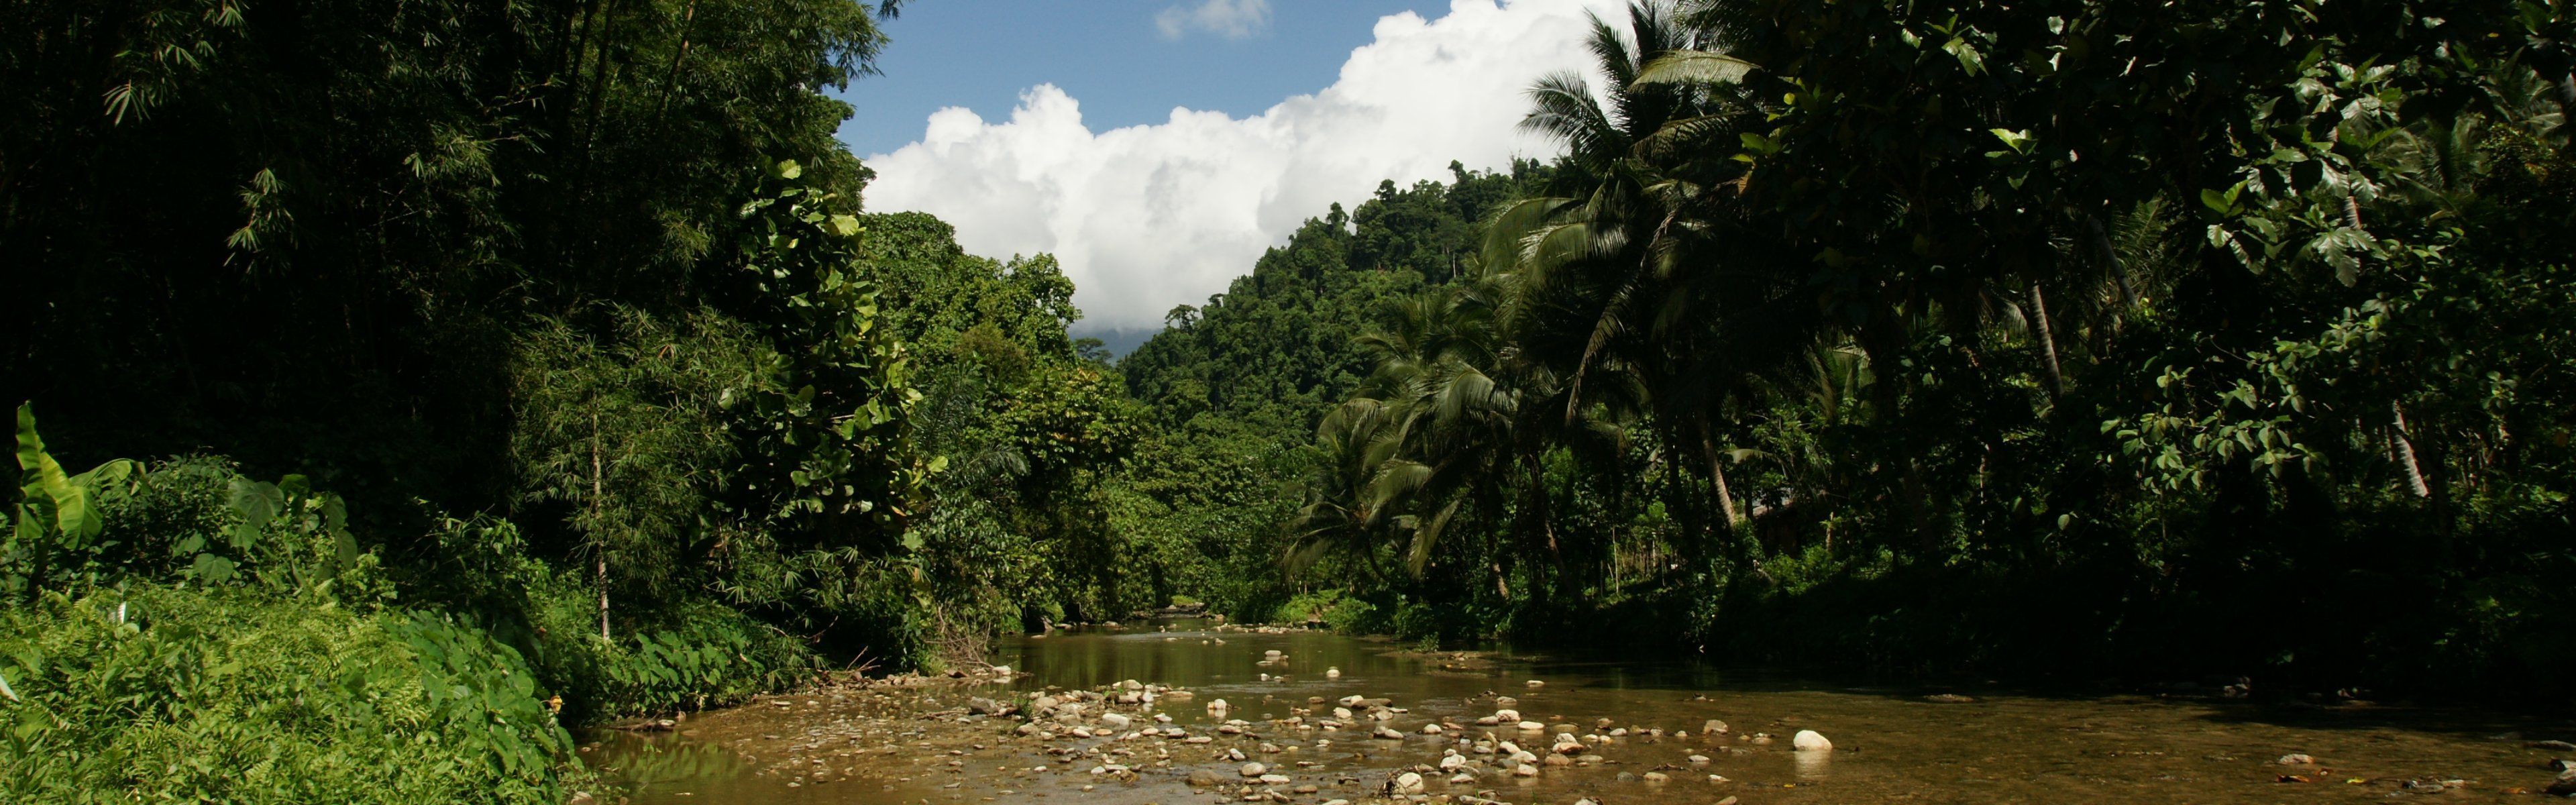 Dual monitor background Tropical nature, river, jungle vegetation